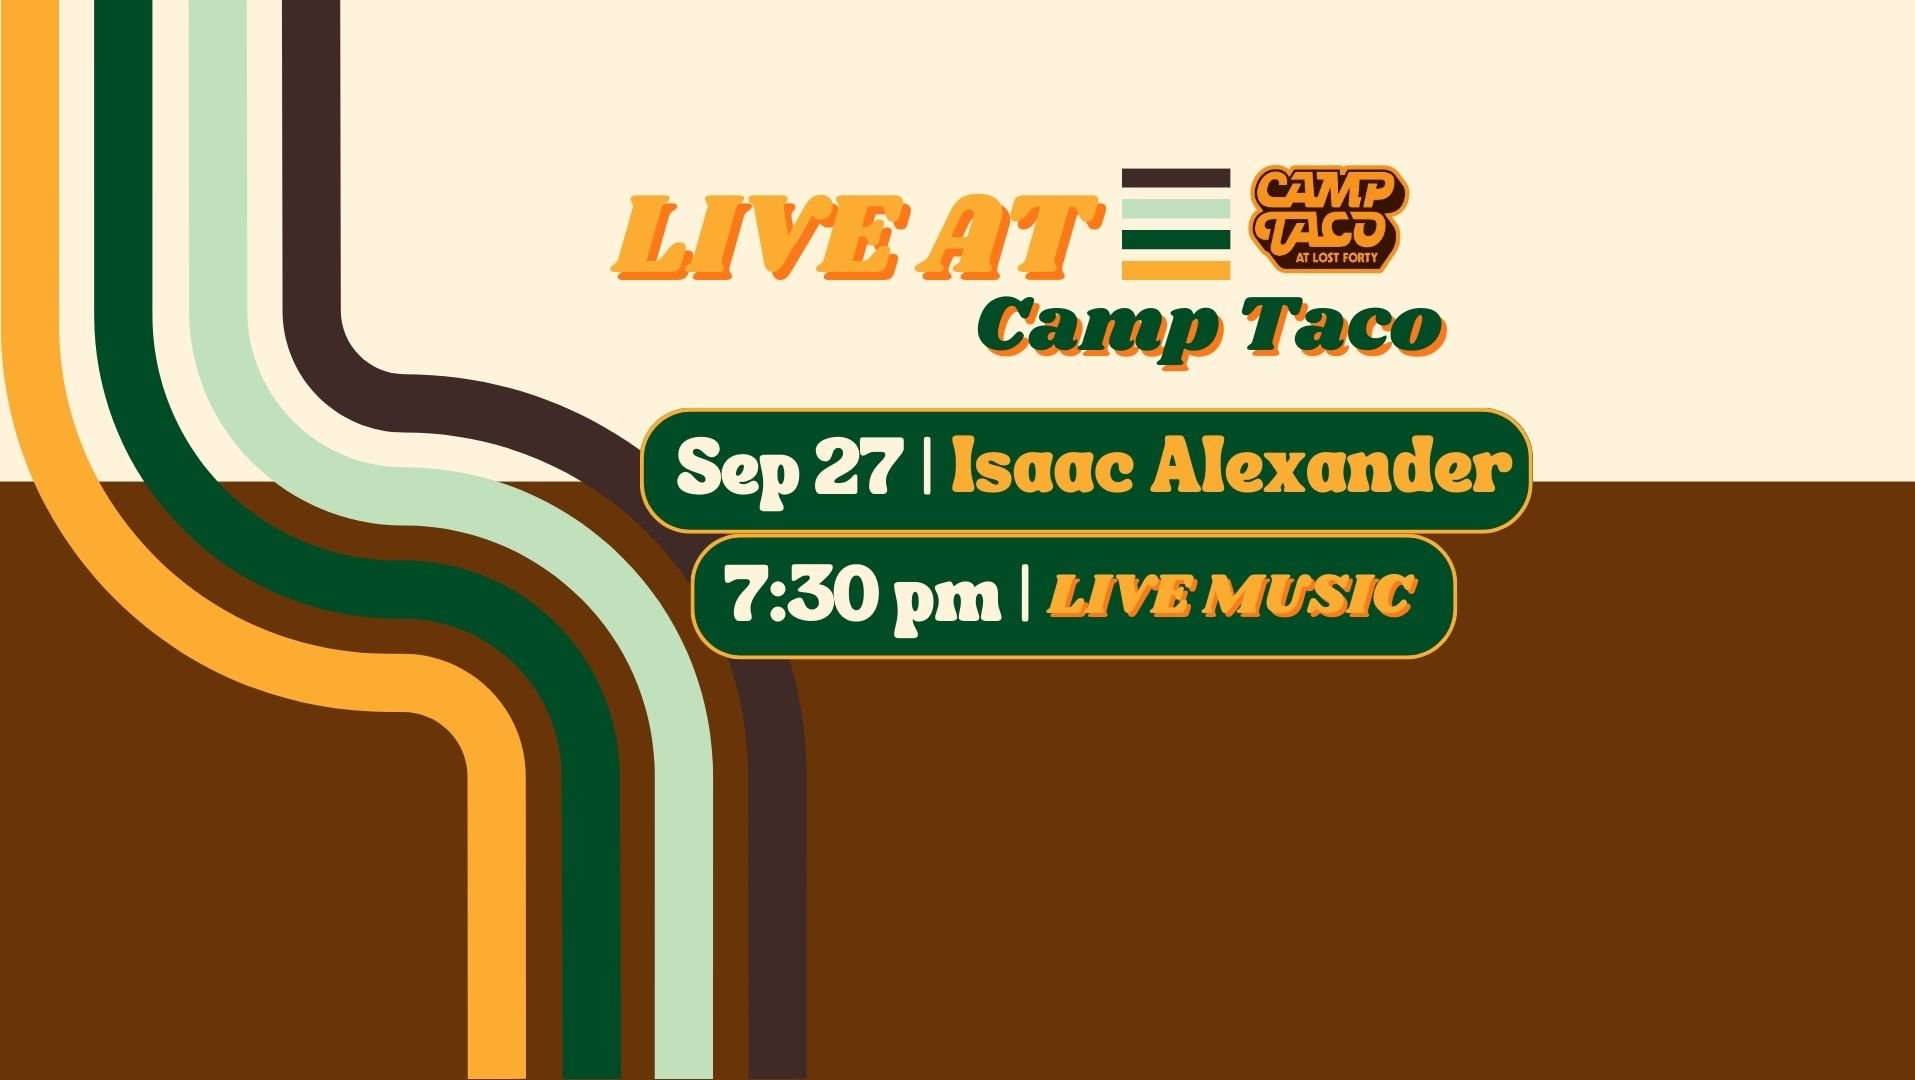 Creators' Village hosts 'The Talent Show' at Camp Taco tonight